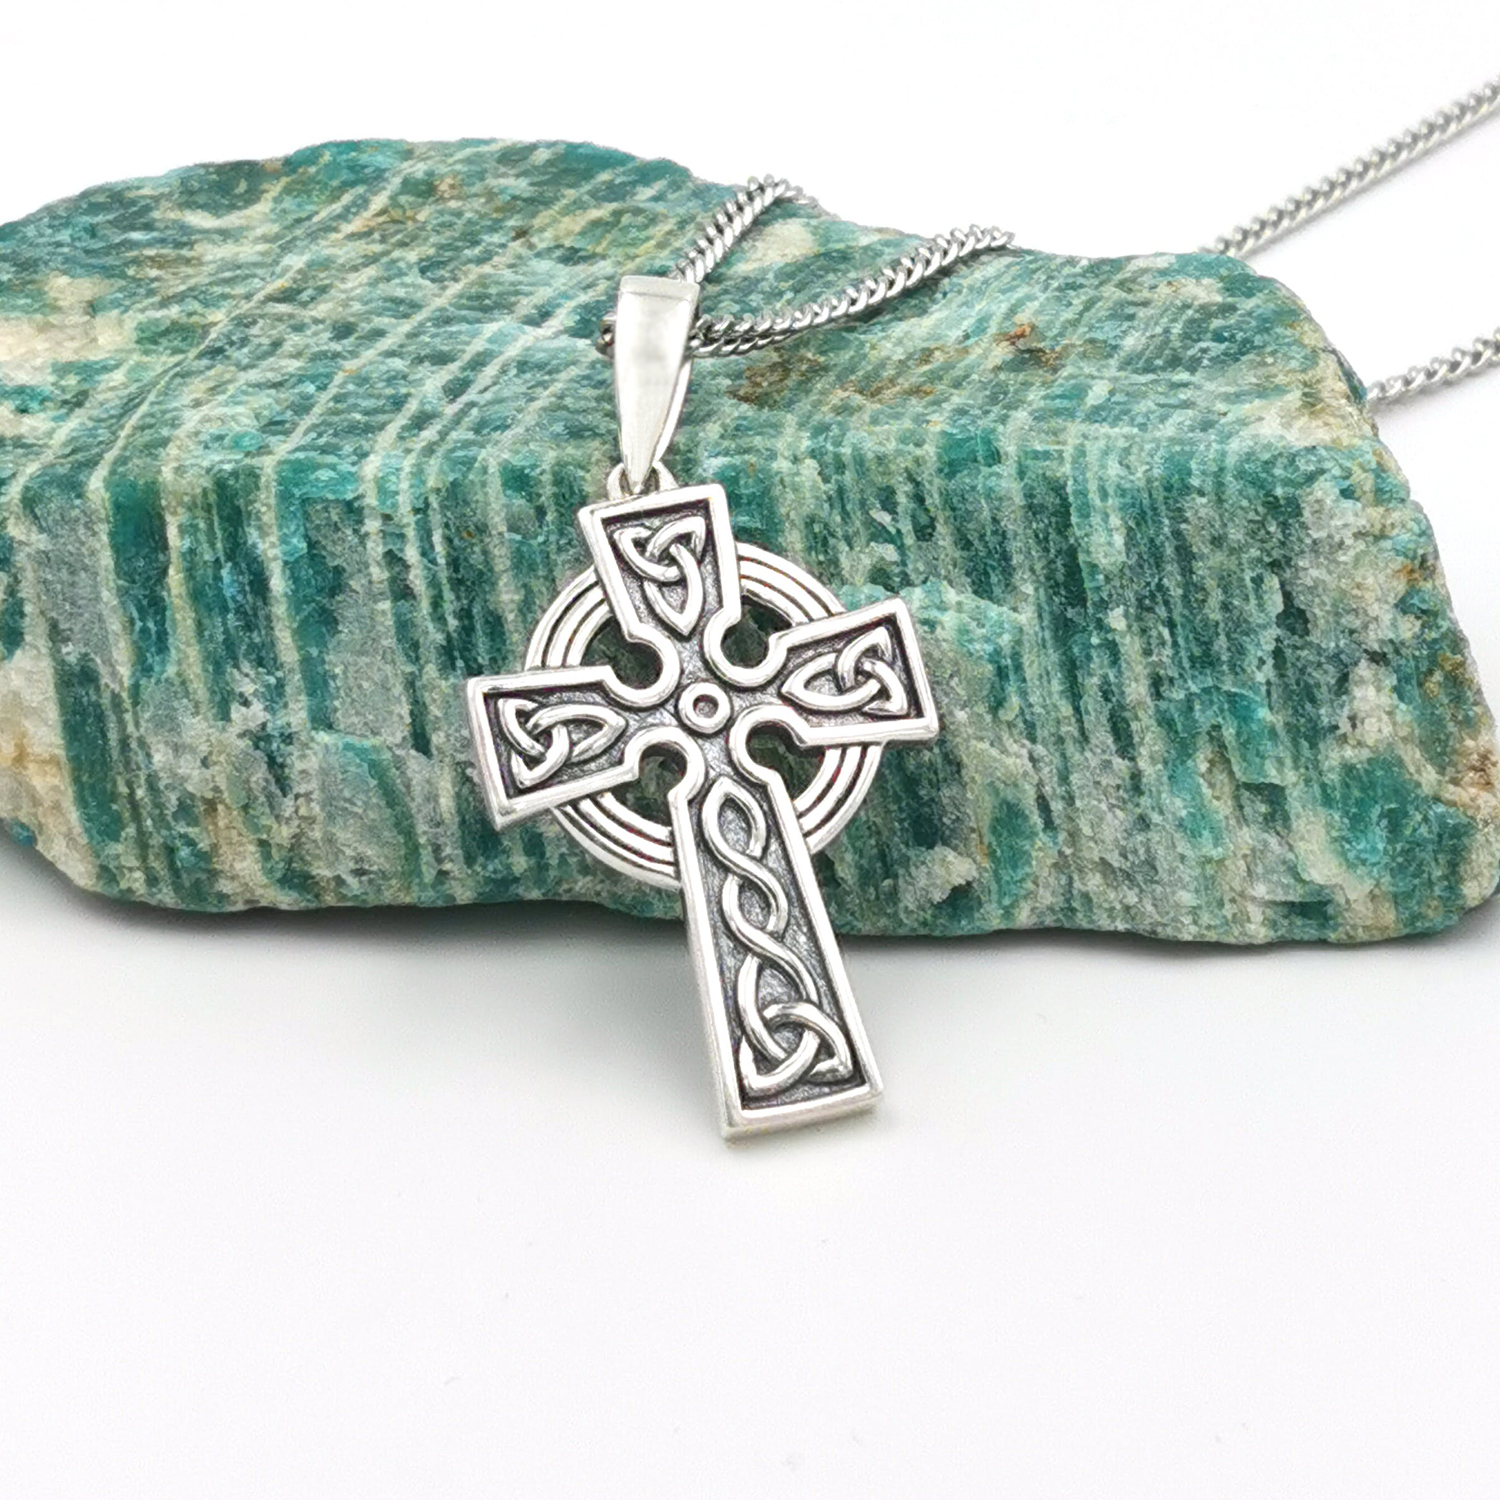 Large 40mm Silver Tone Irish Ireland Celtic Cross Zinc Pendant Charm Necklace 